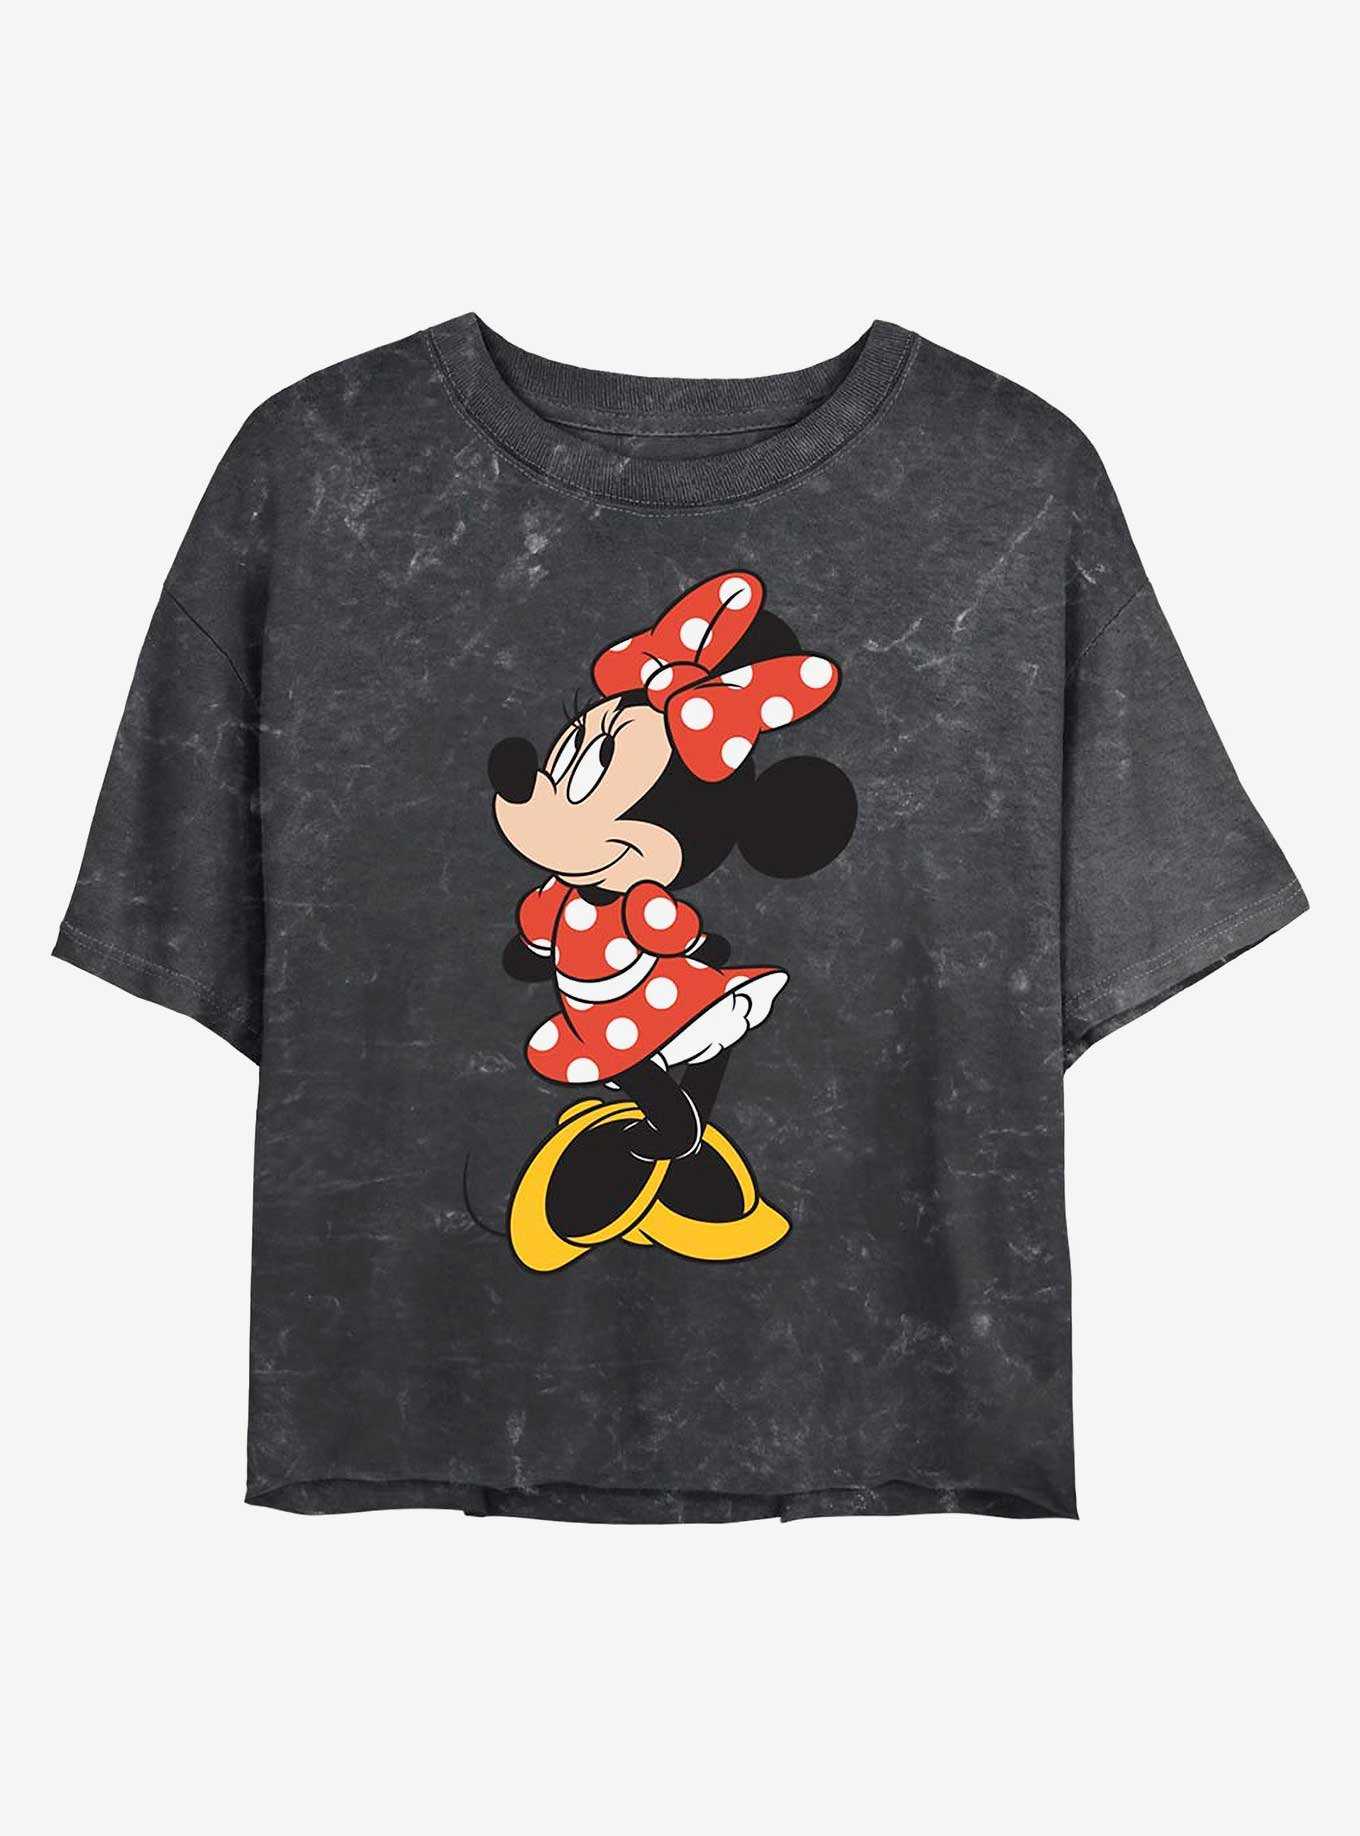 Girls Disney tank top orange with black trim Minnie Mouse polka dot bow